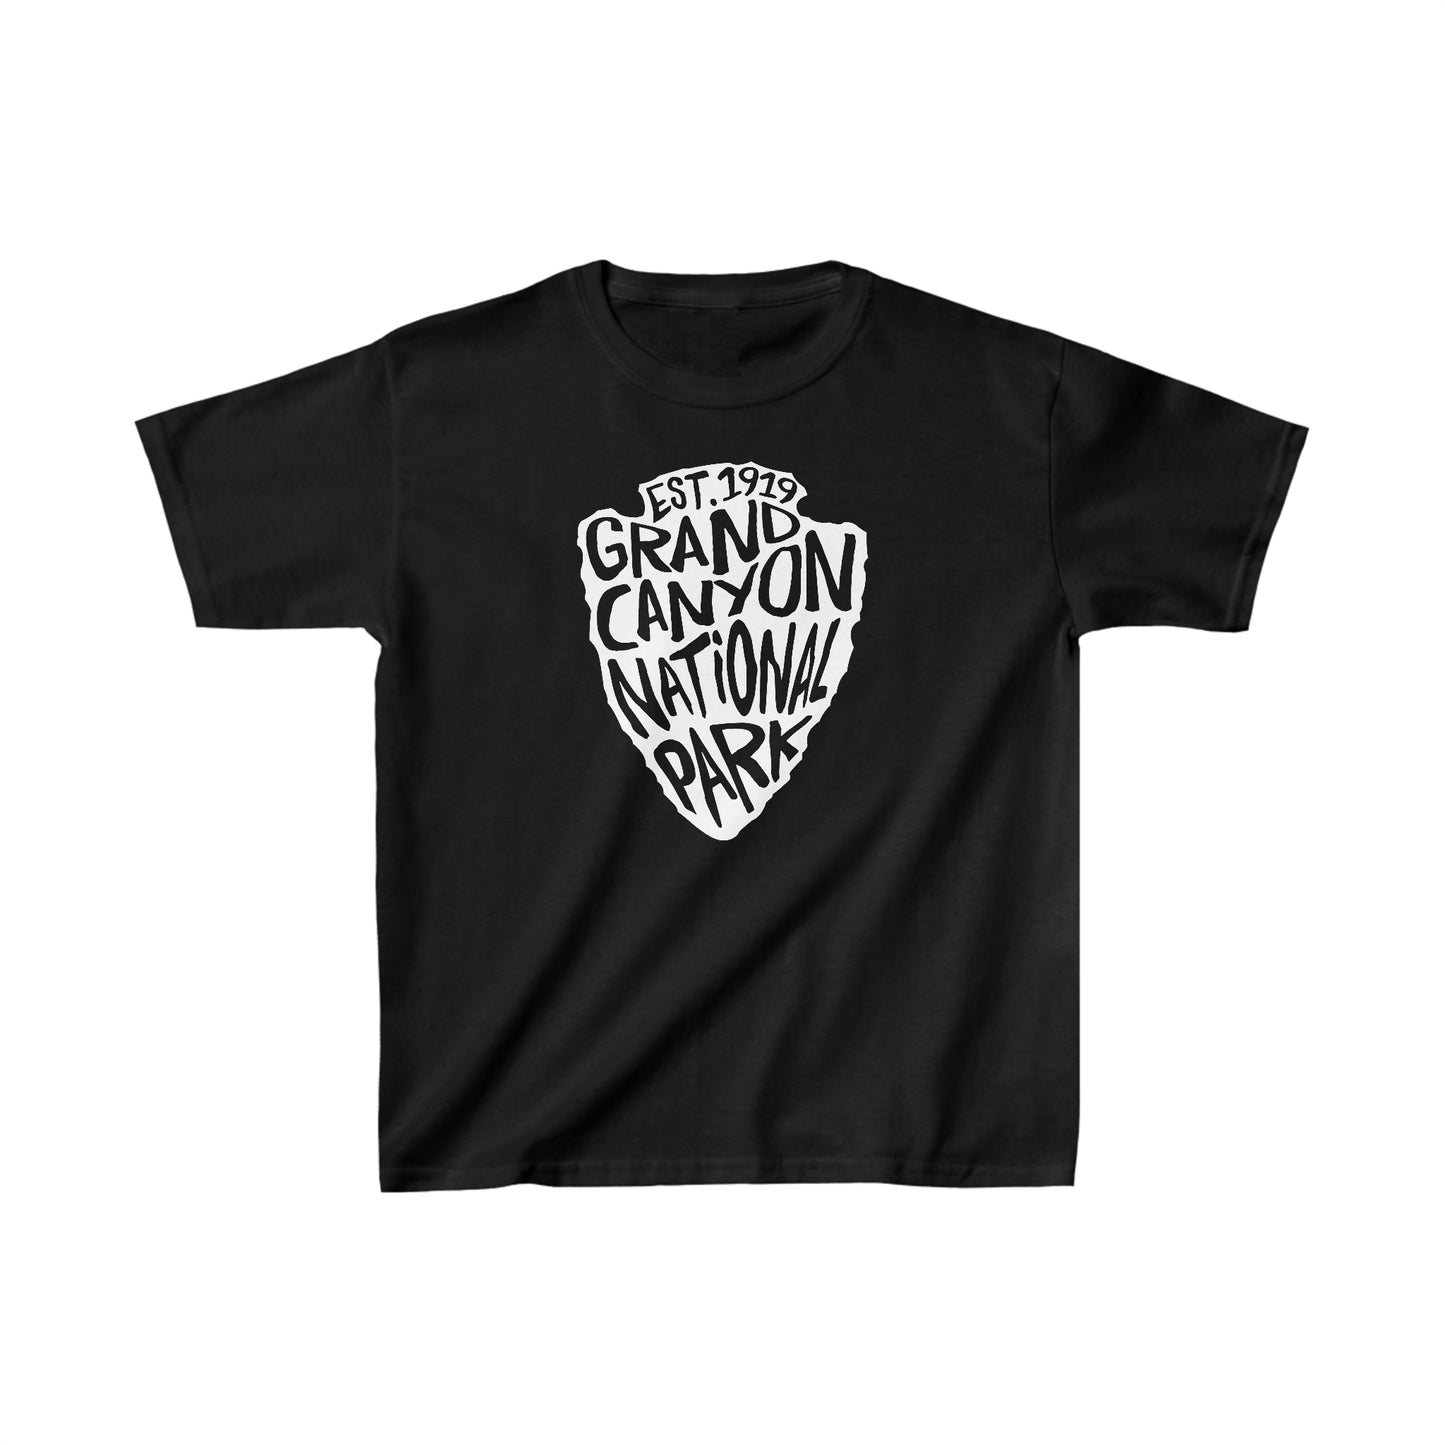 Grand Canyon National Park Child T-Shirt - Arrowhead Design